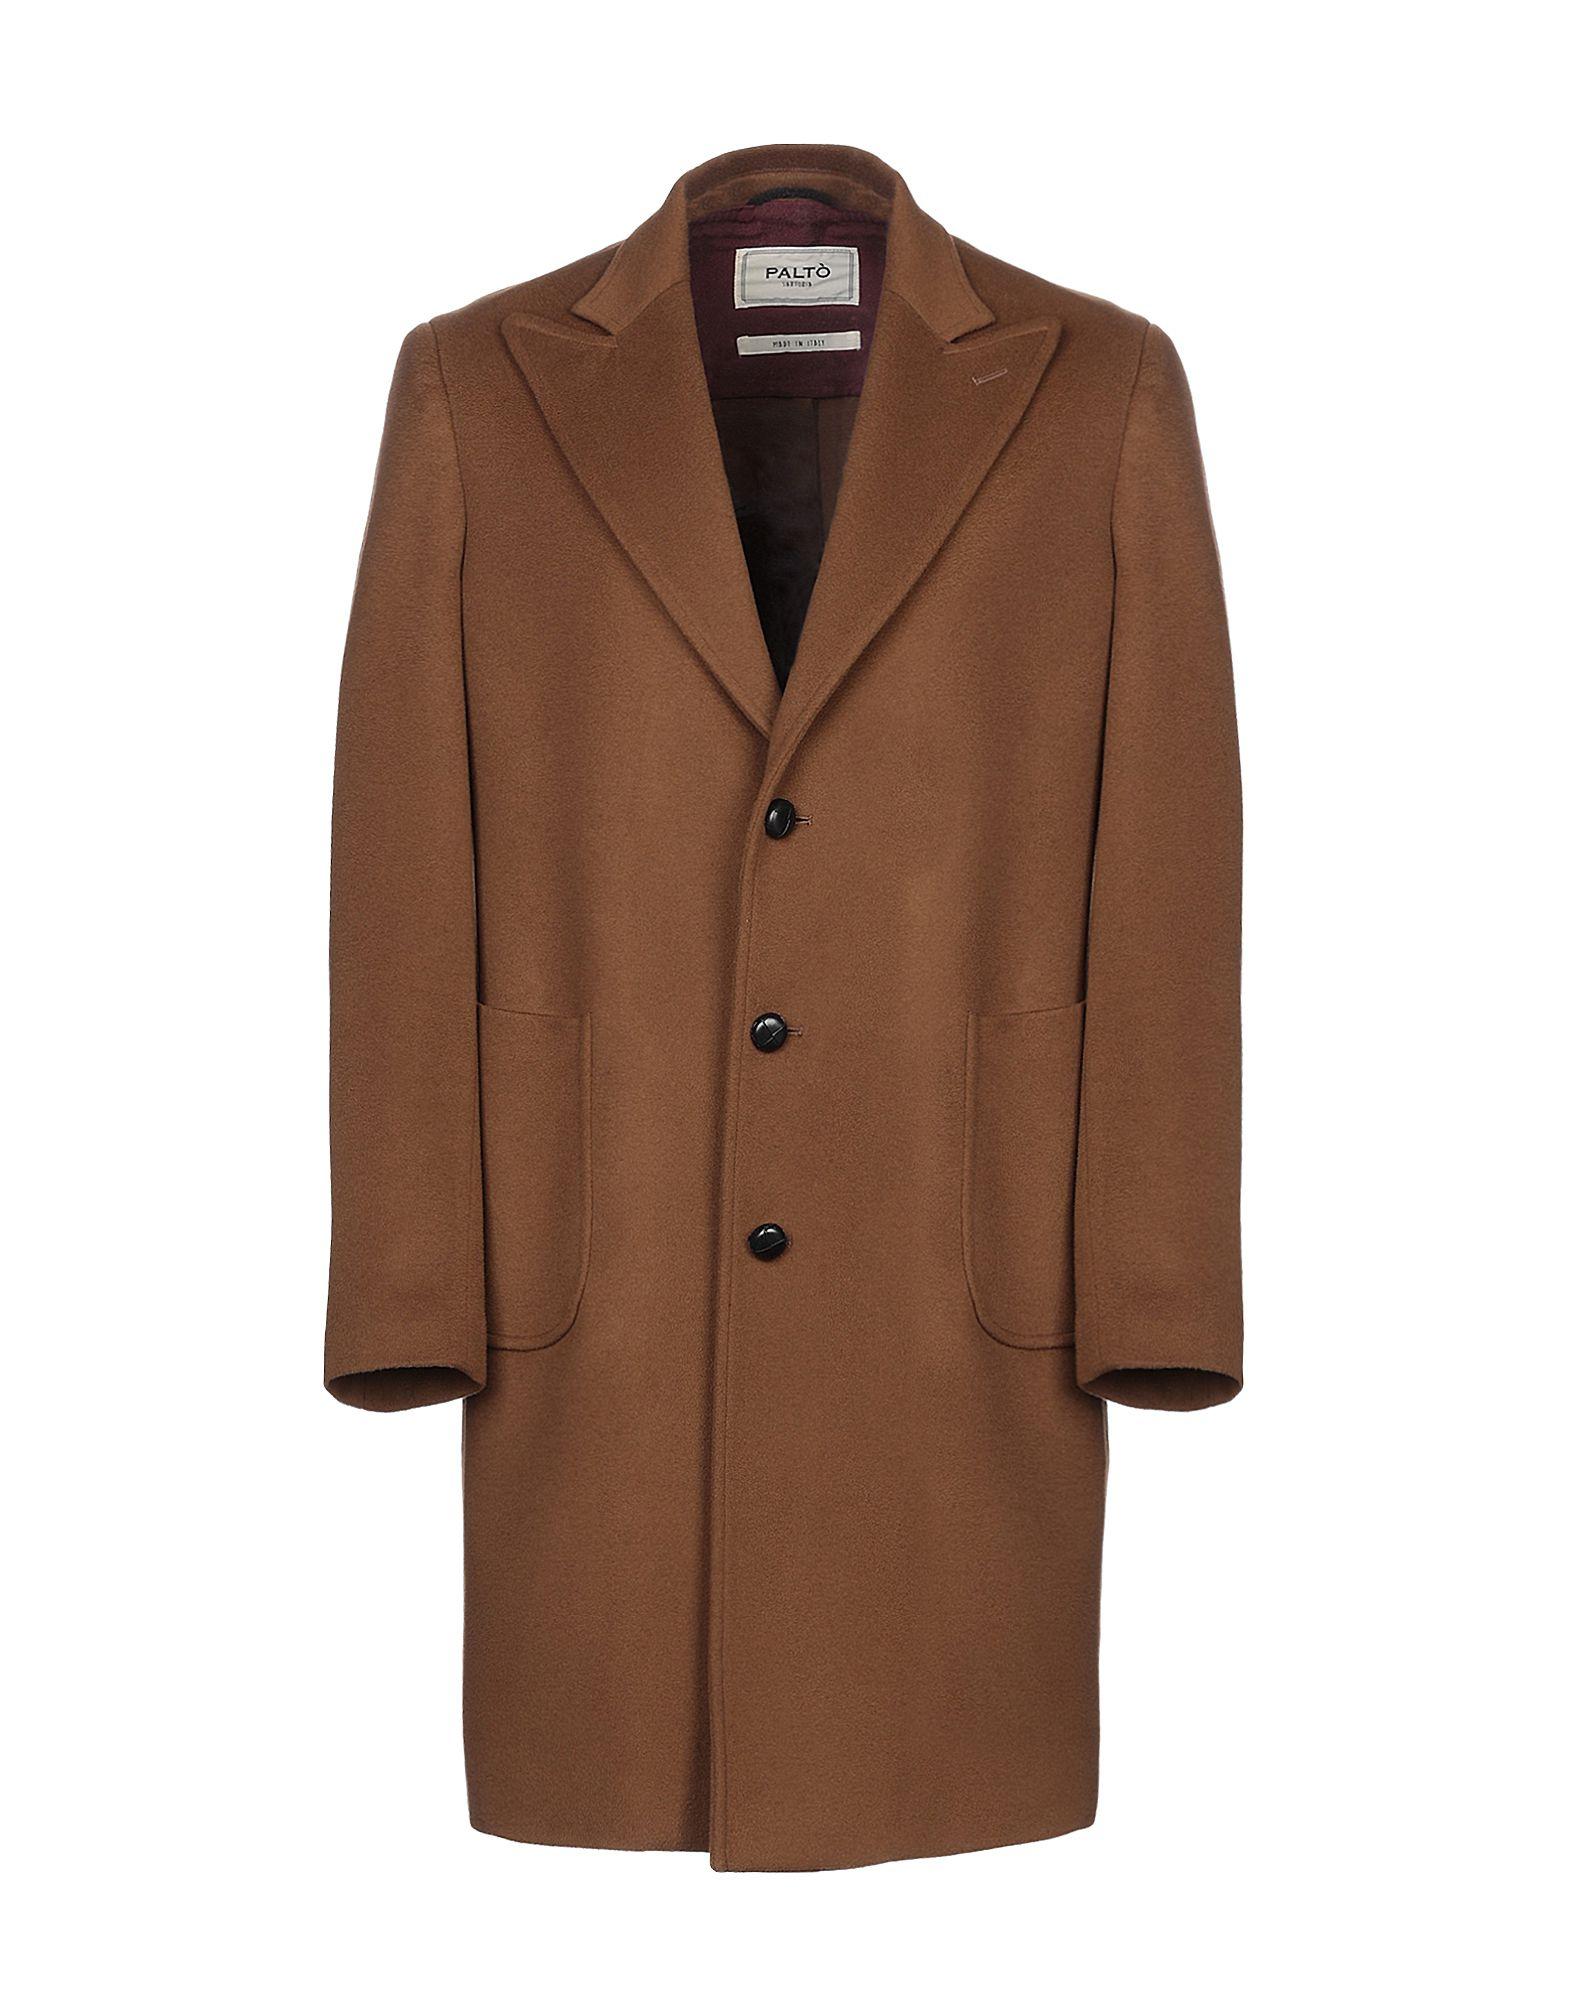 Paltò Wool Coat in Camel (Brown) for Men - Lyst